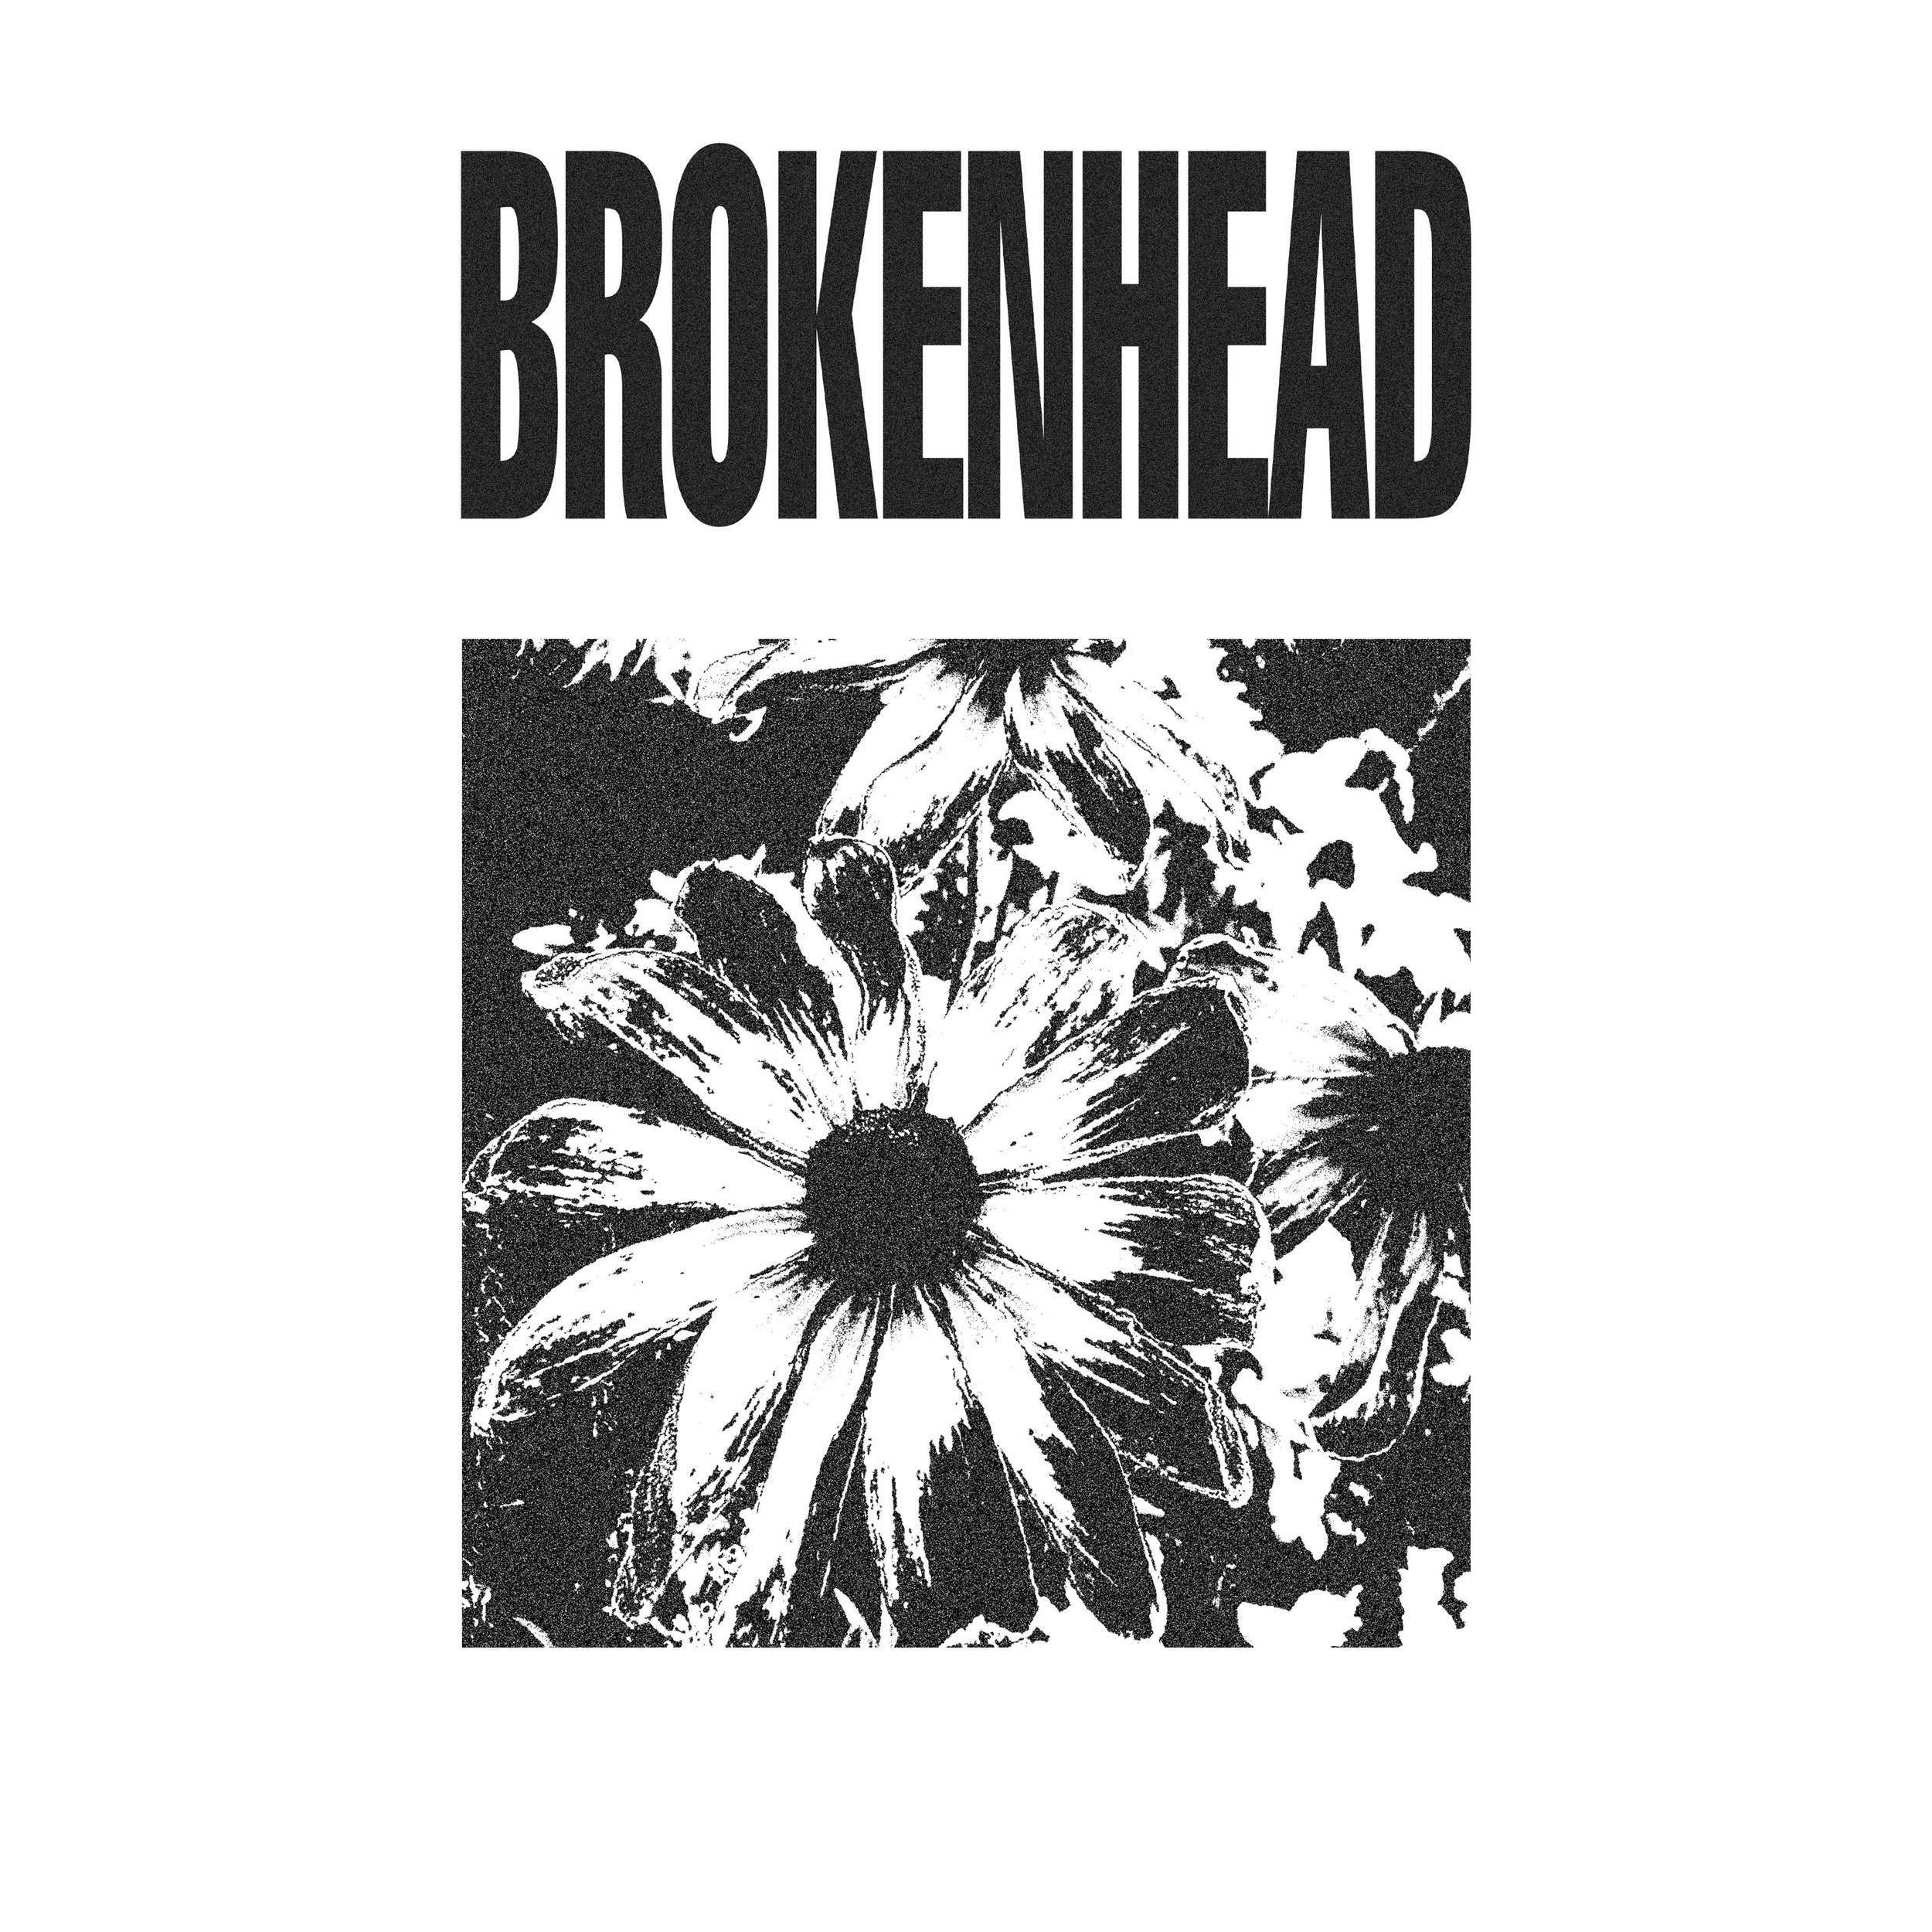 Brokenhead - Sugar - Cover.jpg